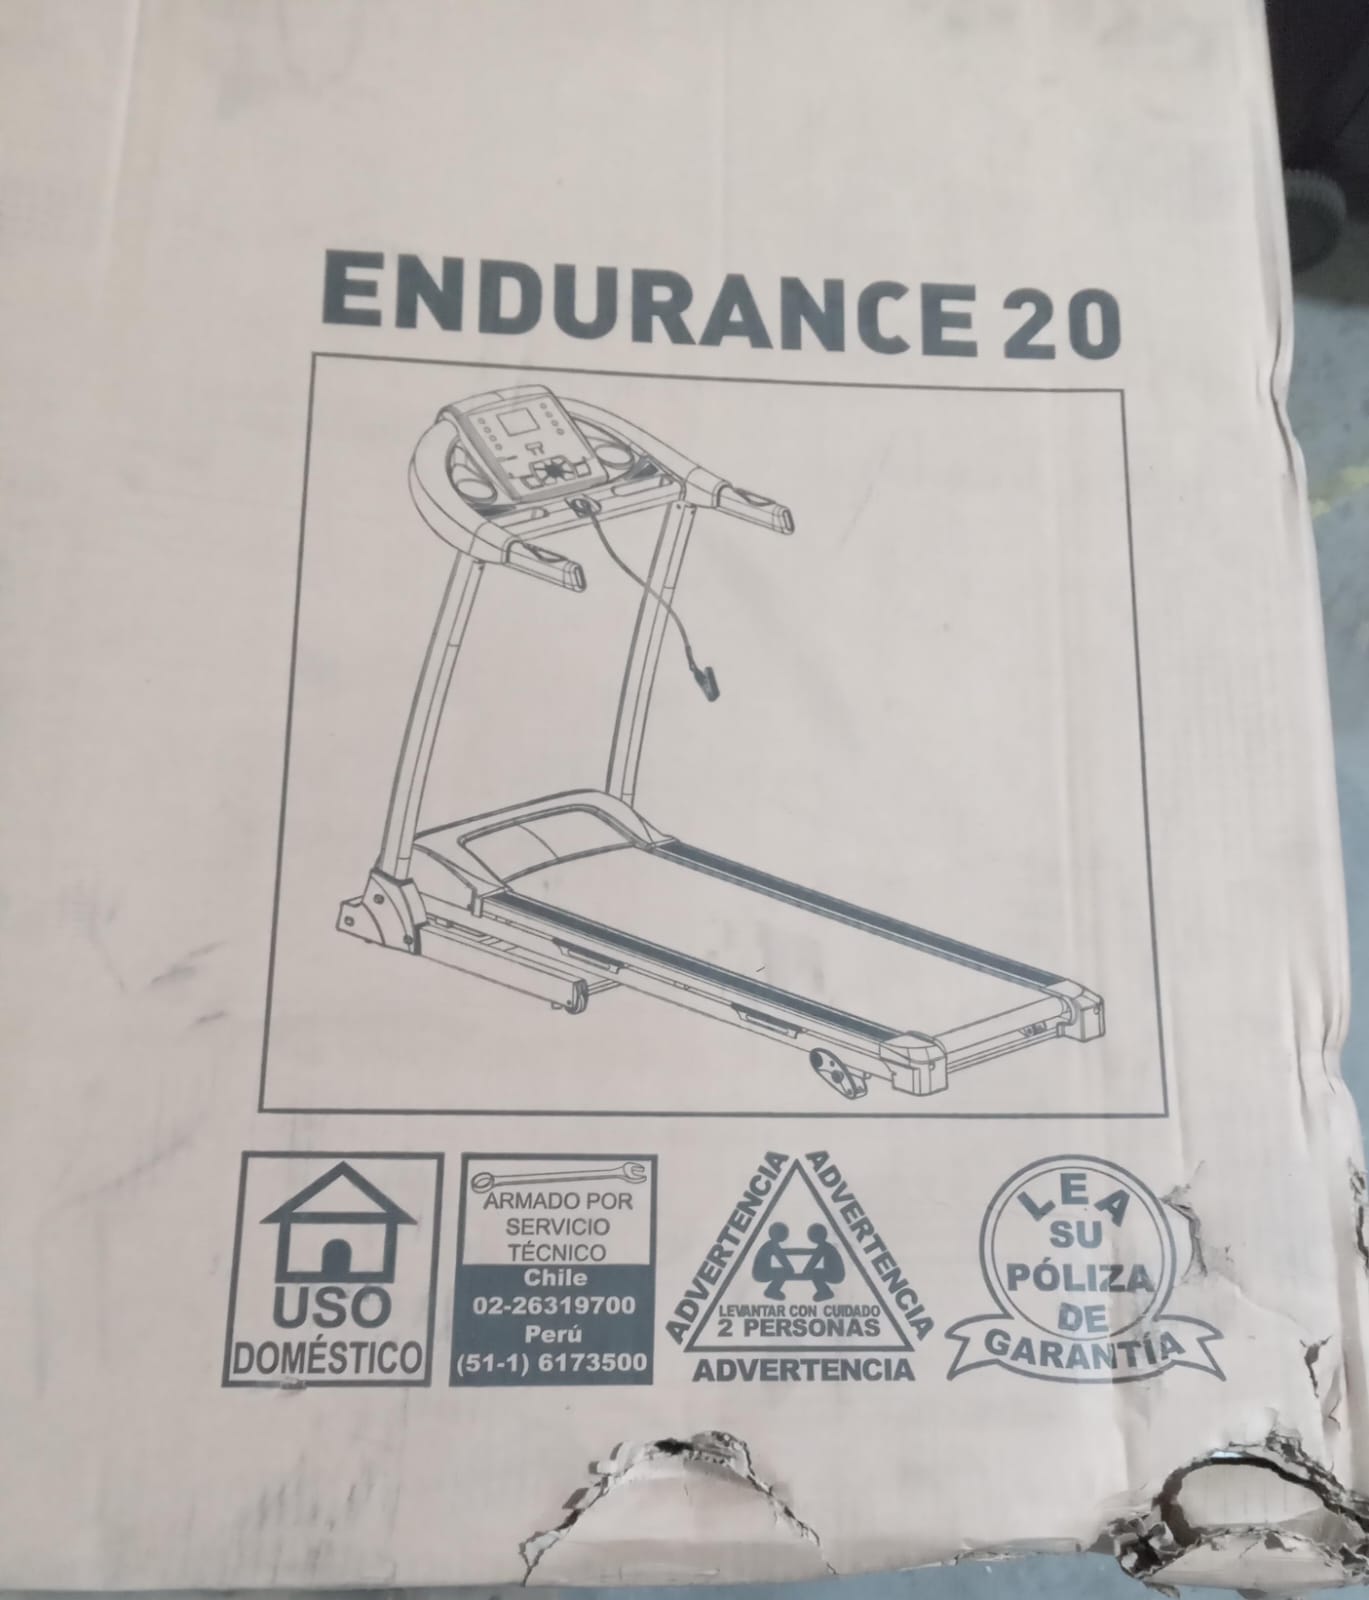 Trotadora Electrica Muvo Endurance 20 [Openbox]